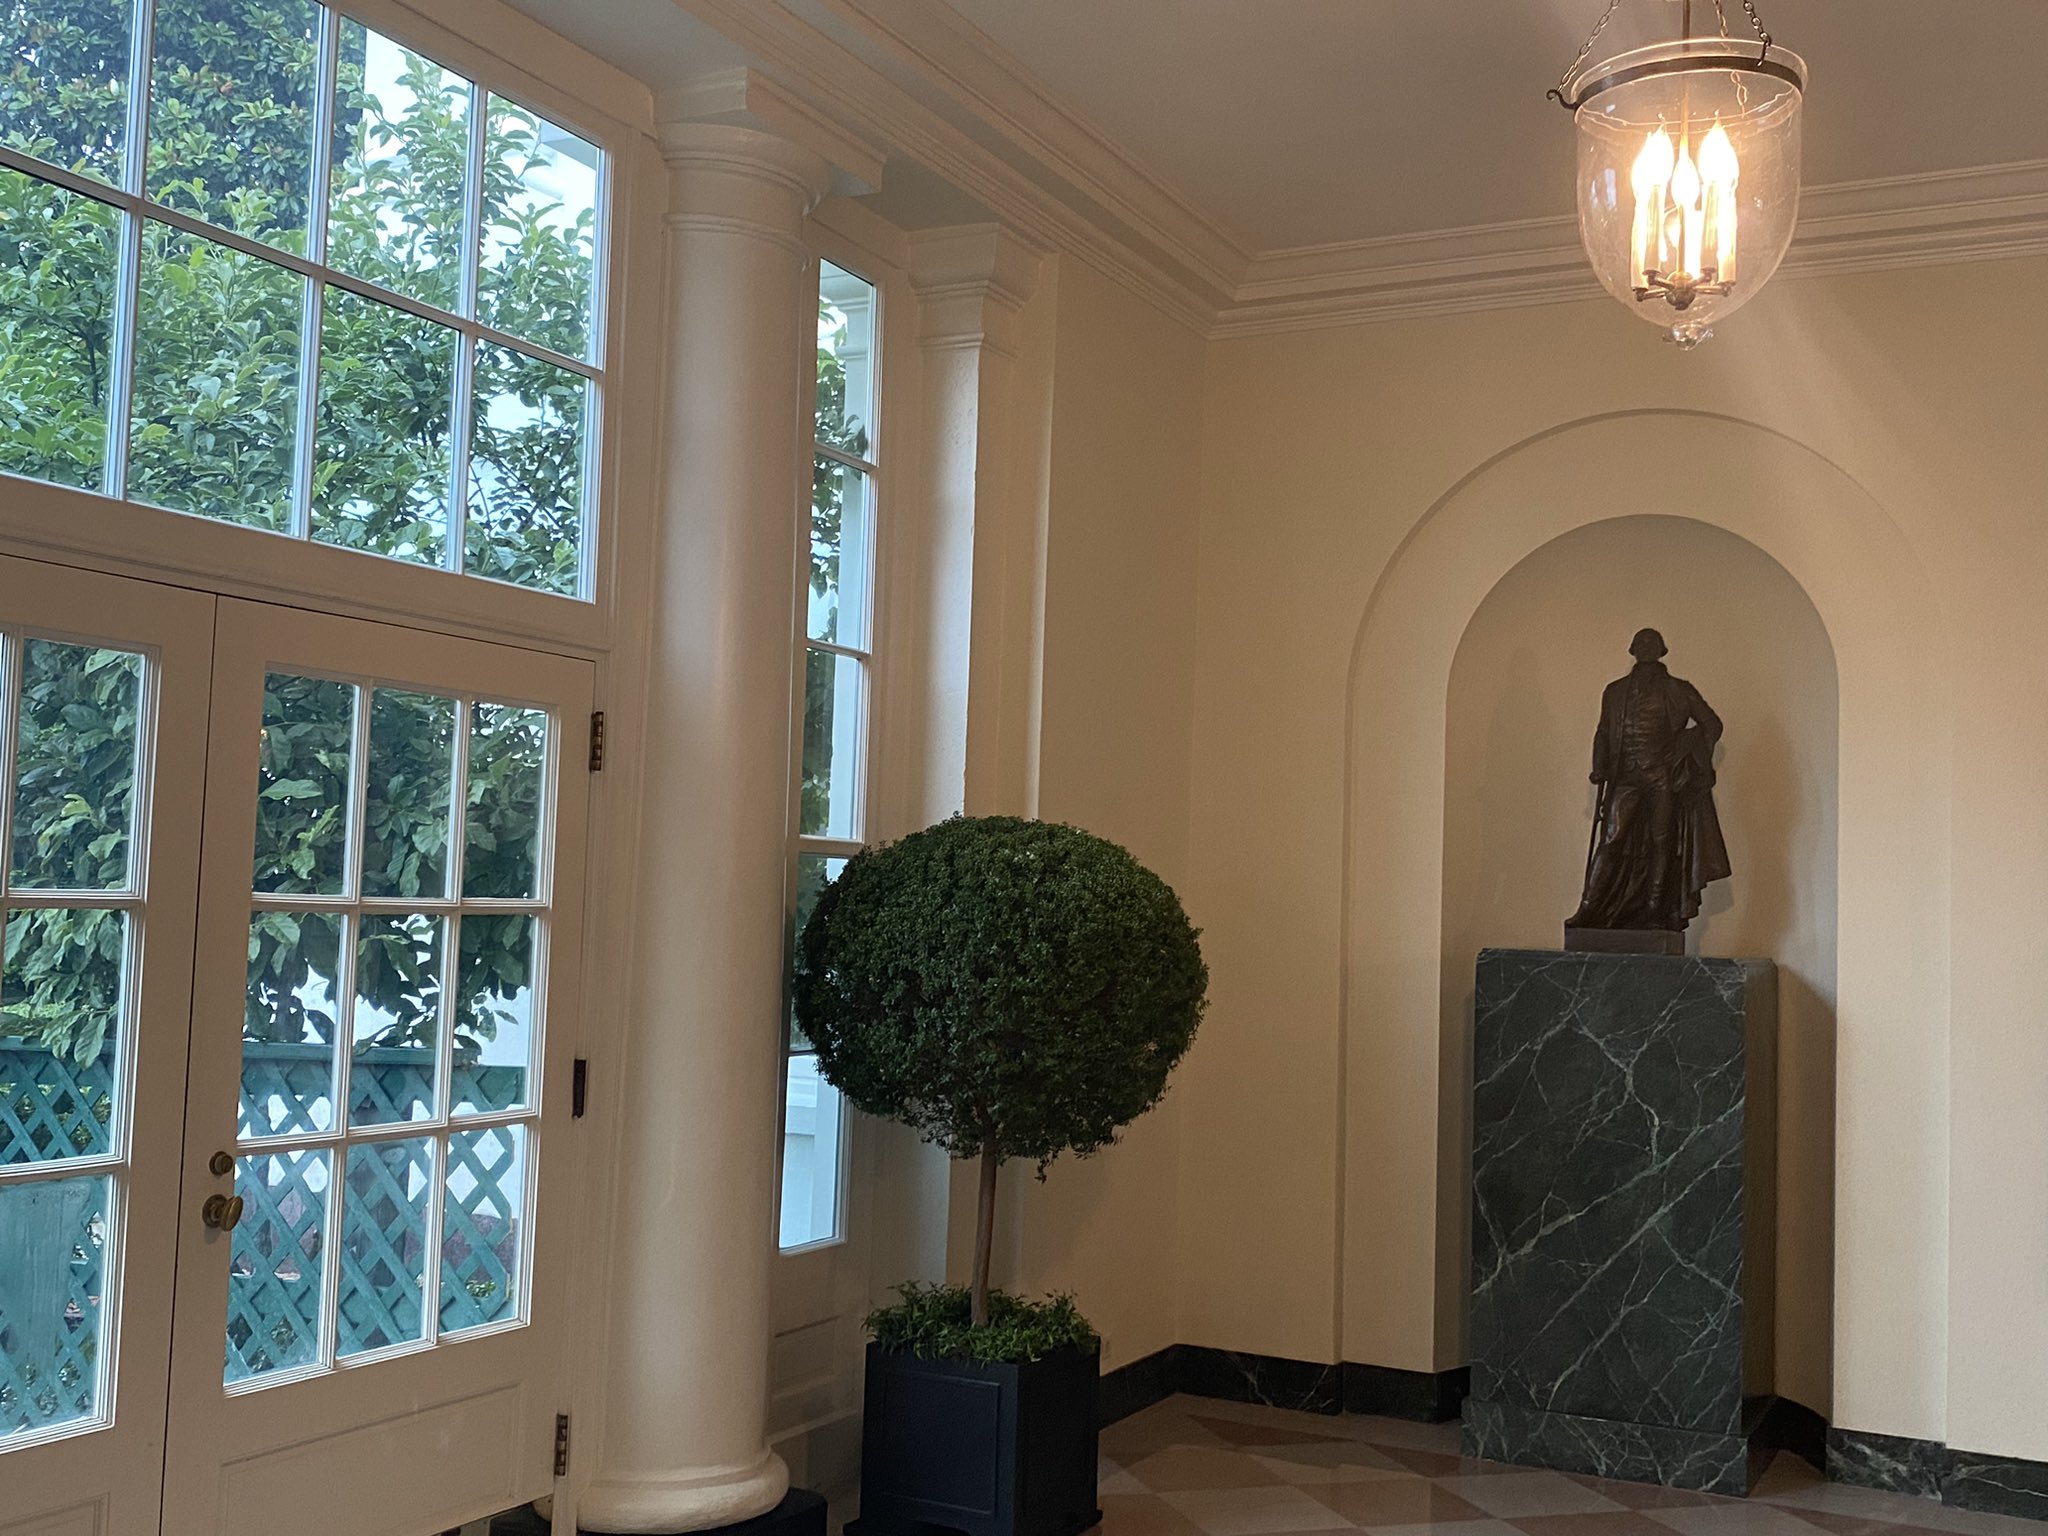 Anand Mahindra shares glimpses of White House art